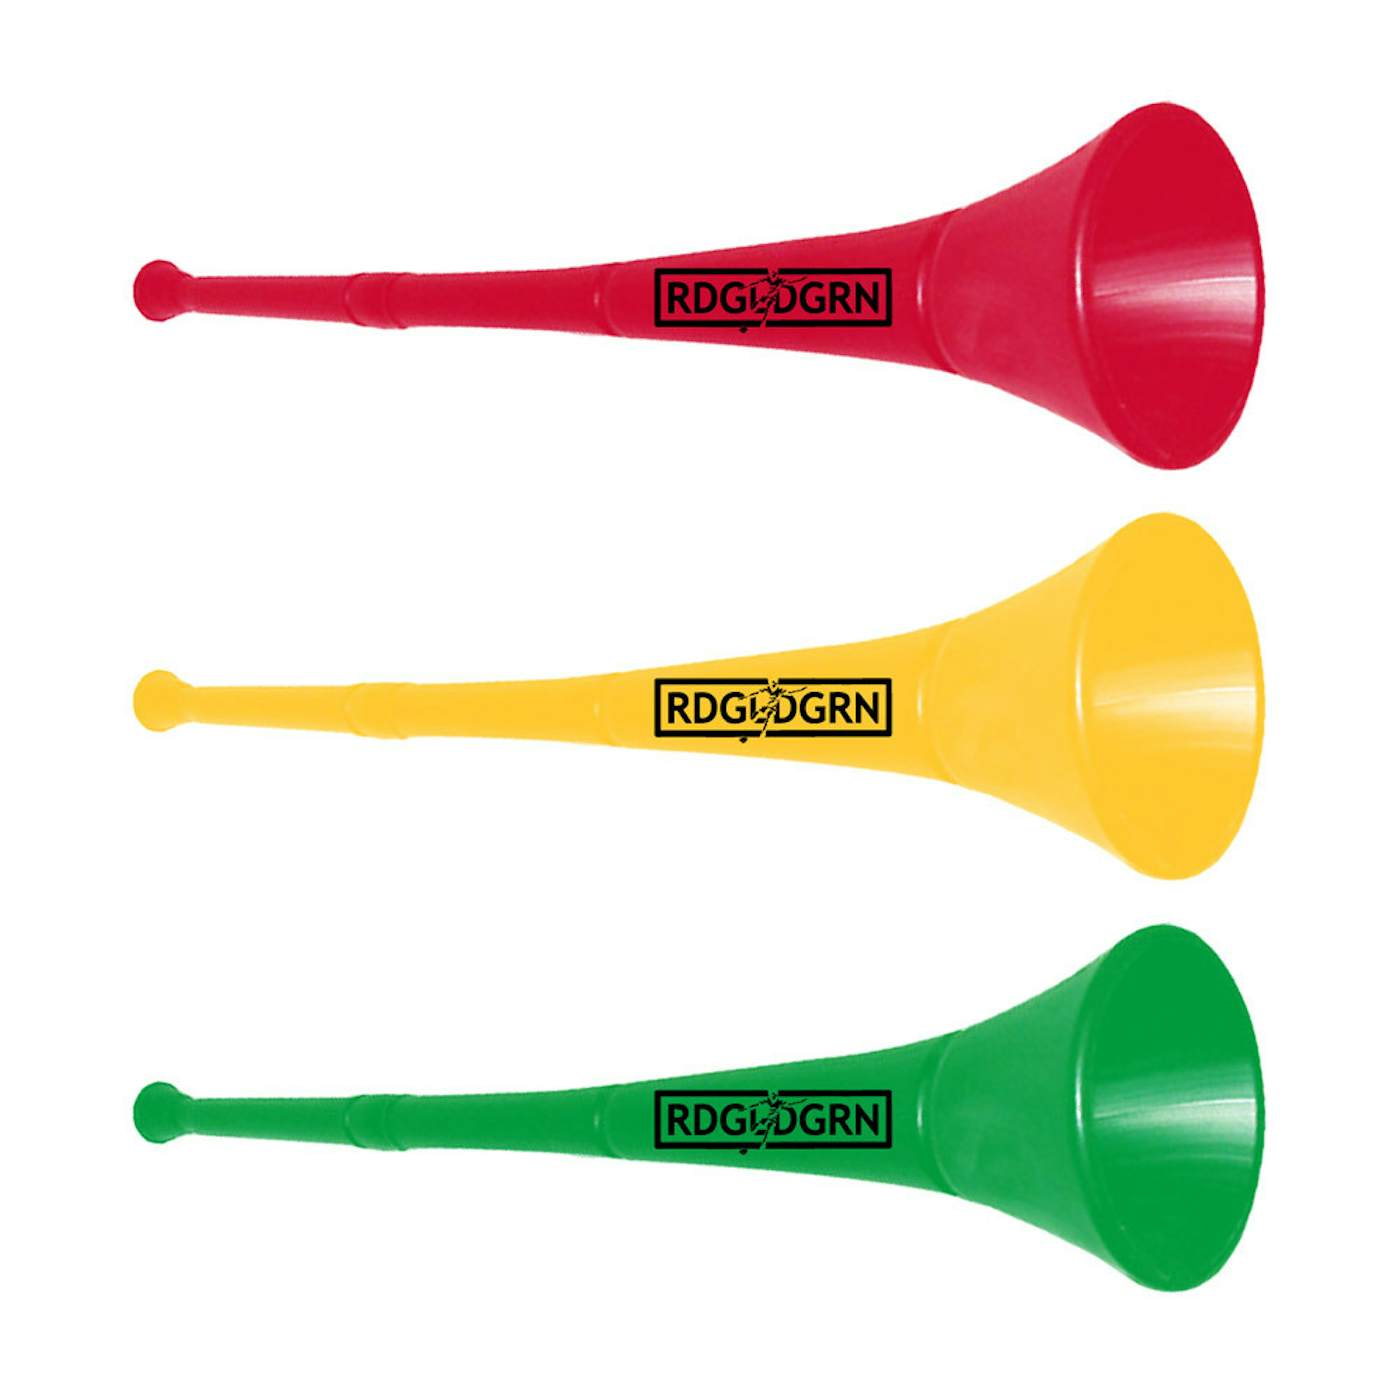 RDGLDGRN Logo Vuvuzela